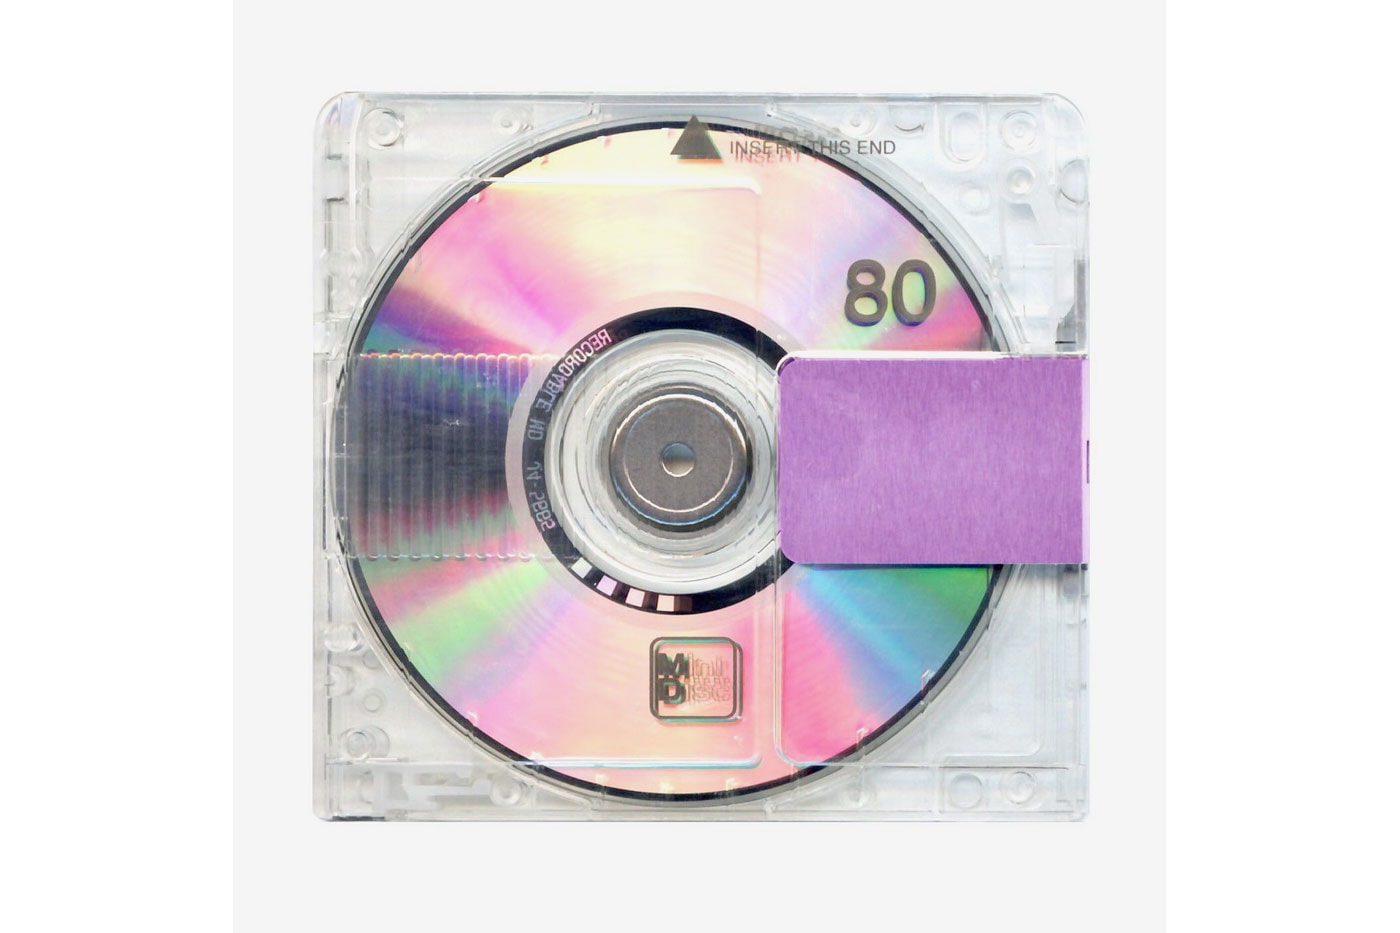 Kanye West 'YANDHI' Holographic Album Cover Art